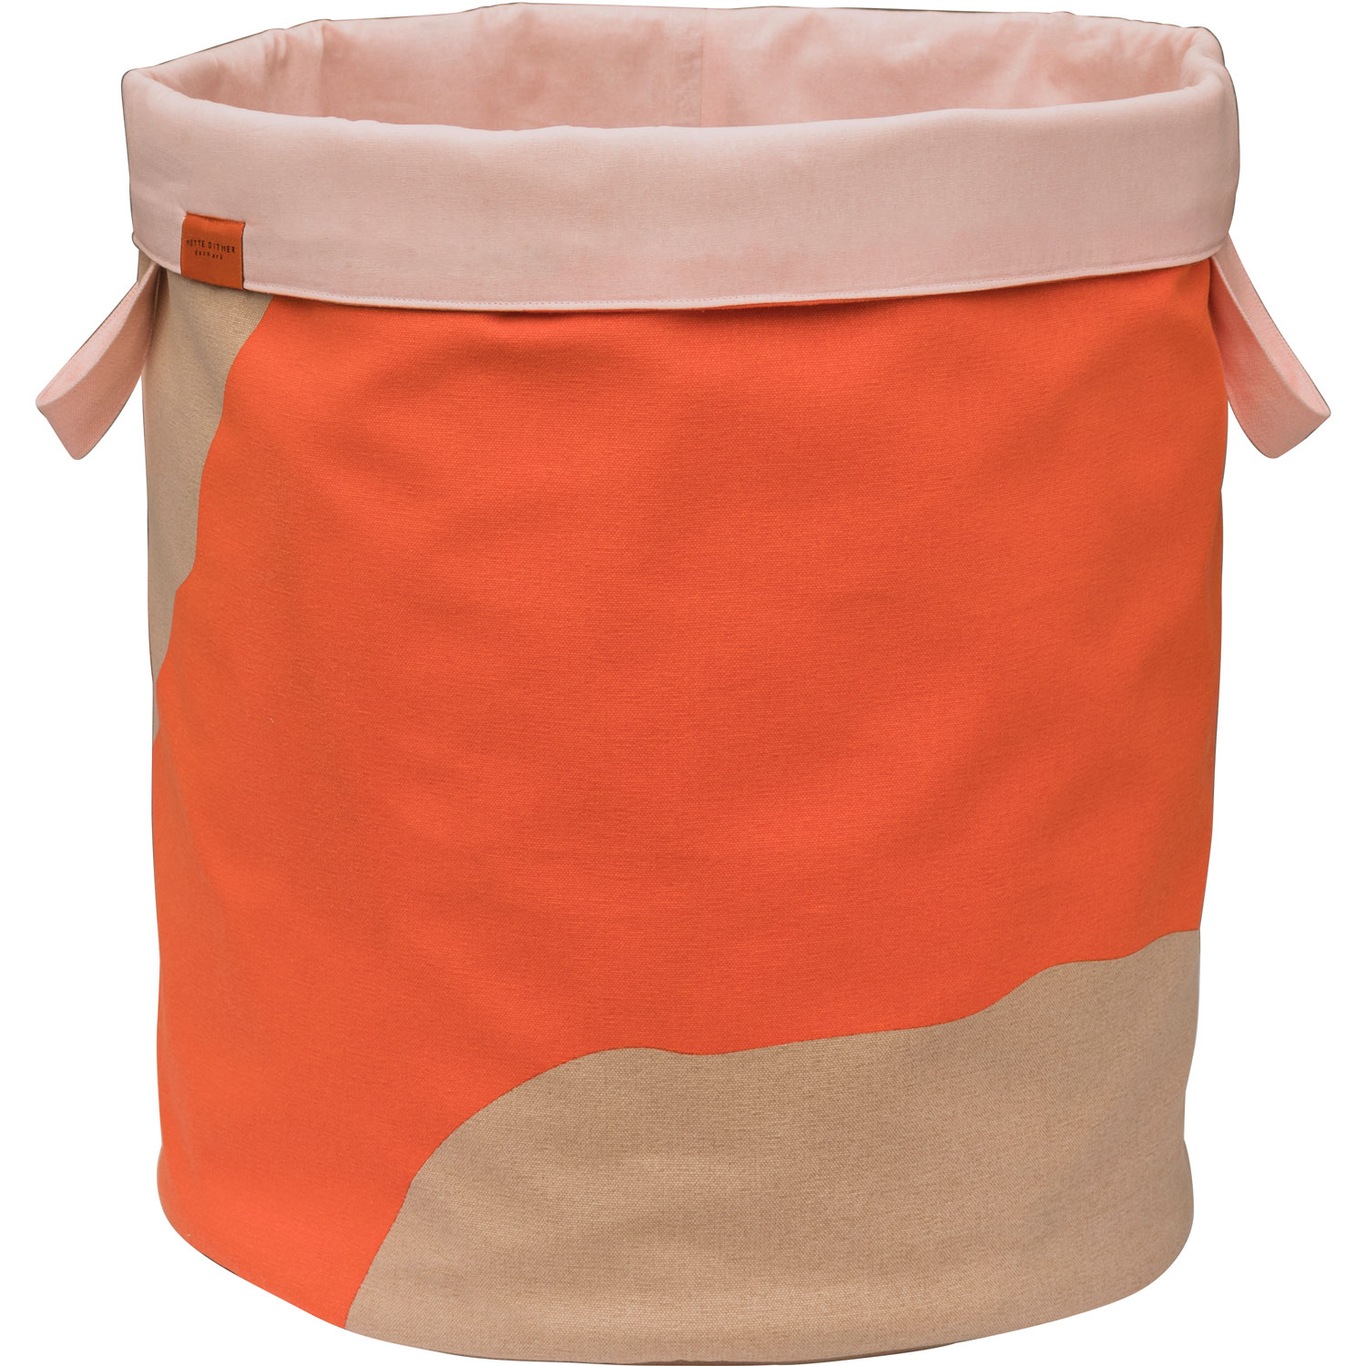 NOVA ARTE Laundry Basket, Orange/Latte